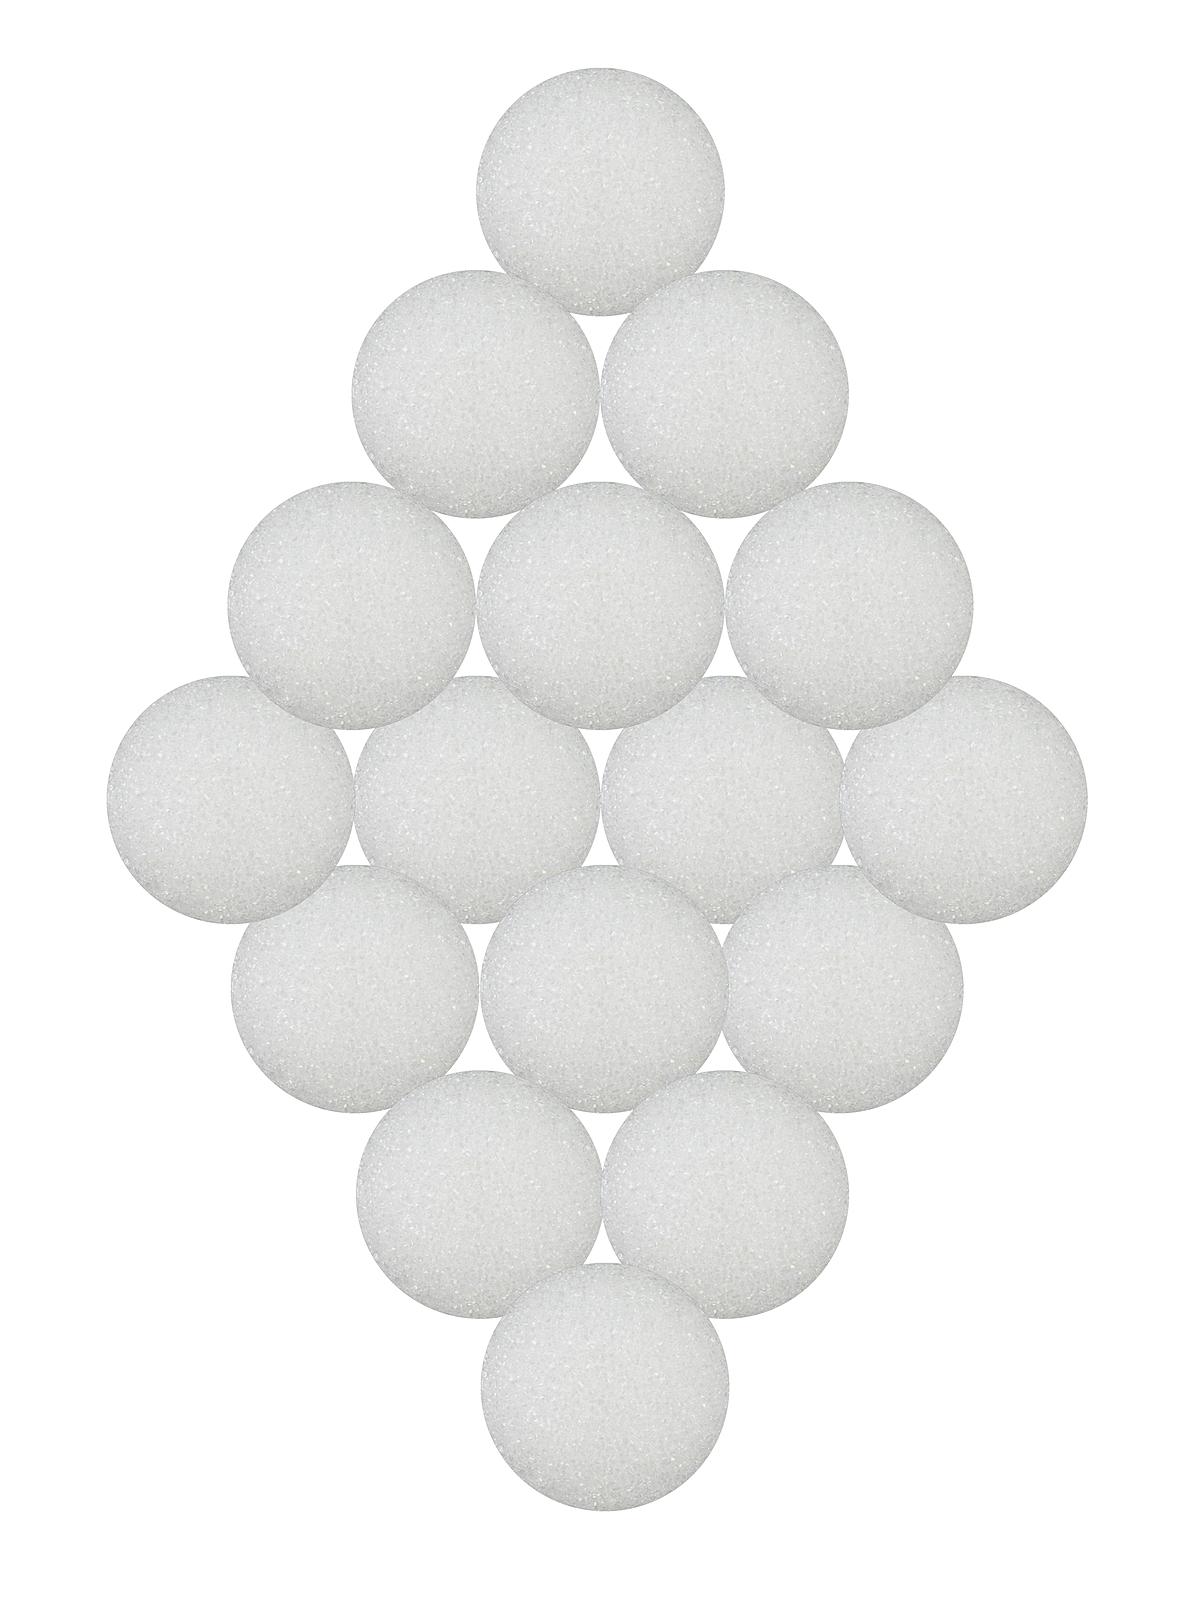 Styrofoam Snowballs 1 In. Pack Of 16